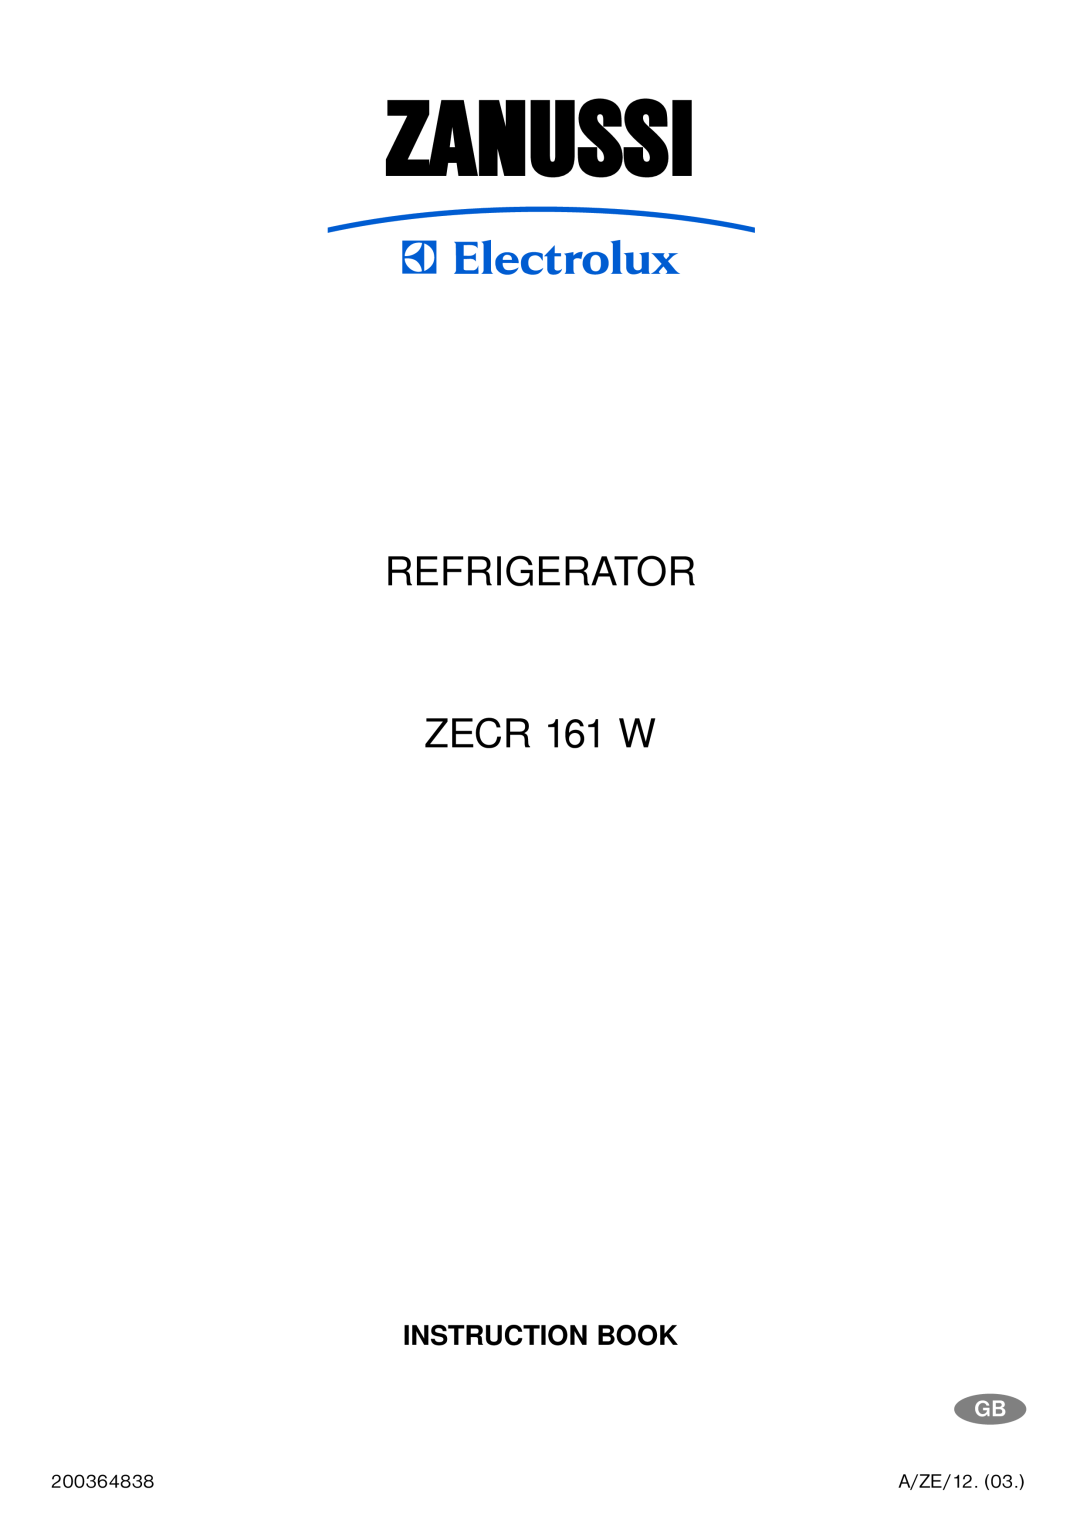 Zanussi manual Zanussi, REFRIGERATOR ZECR 161 W, Instruction Book 